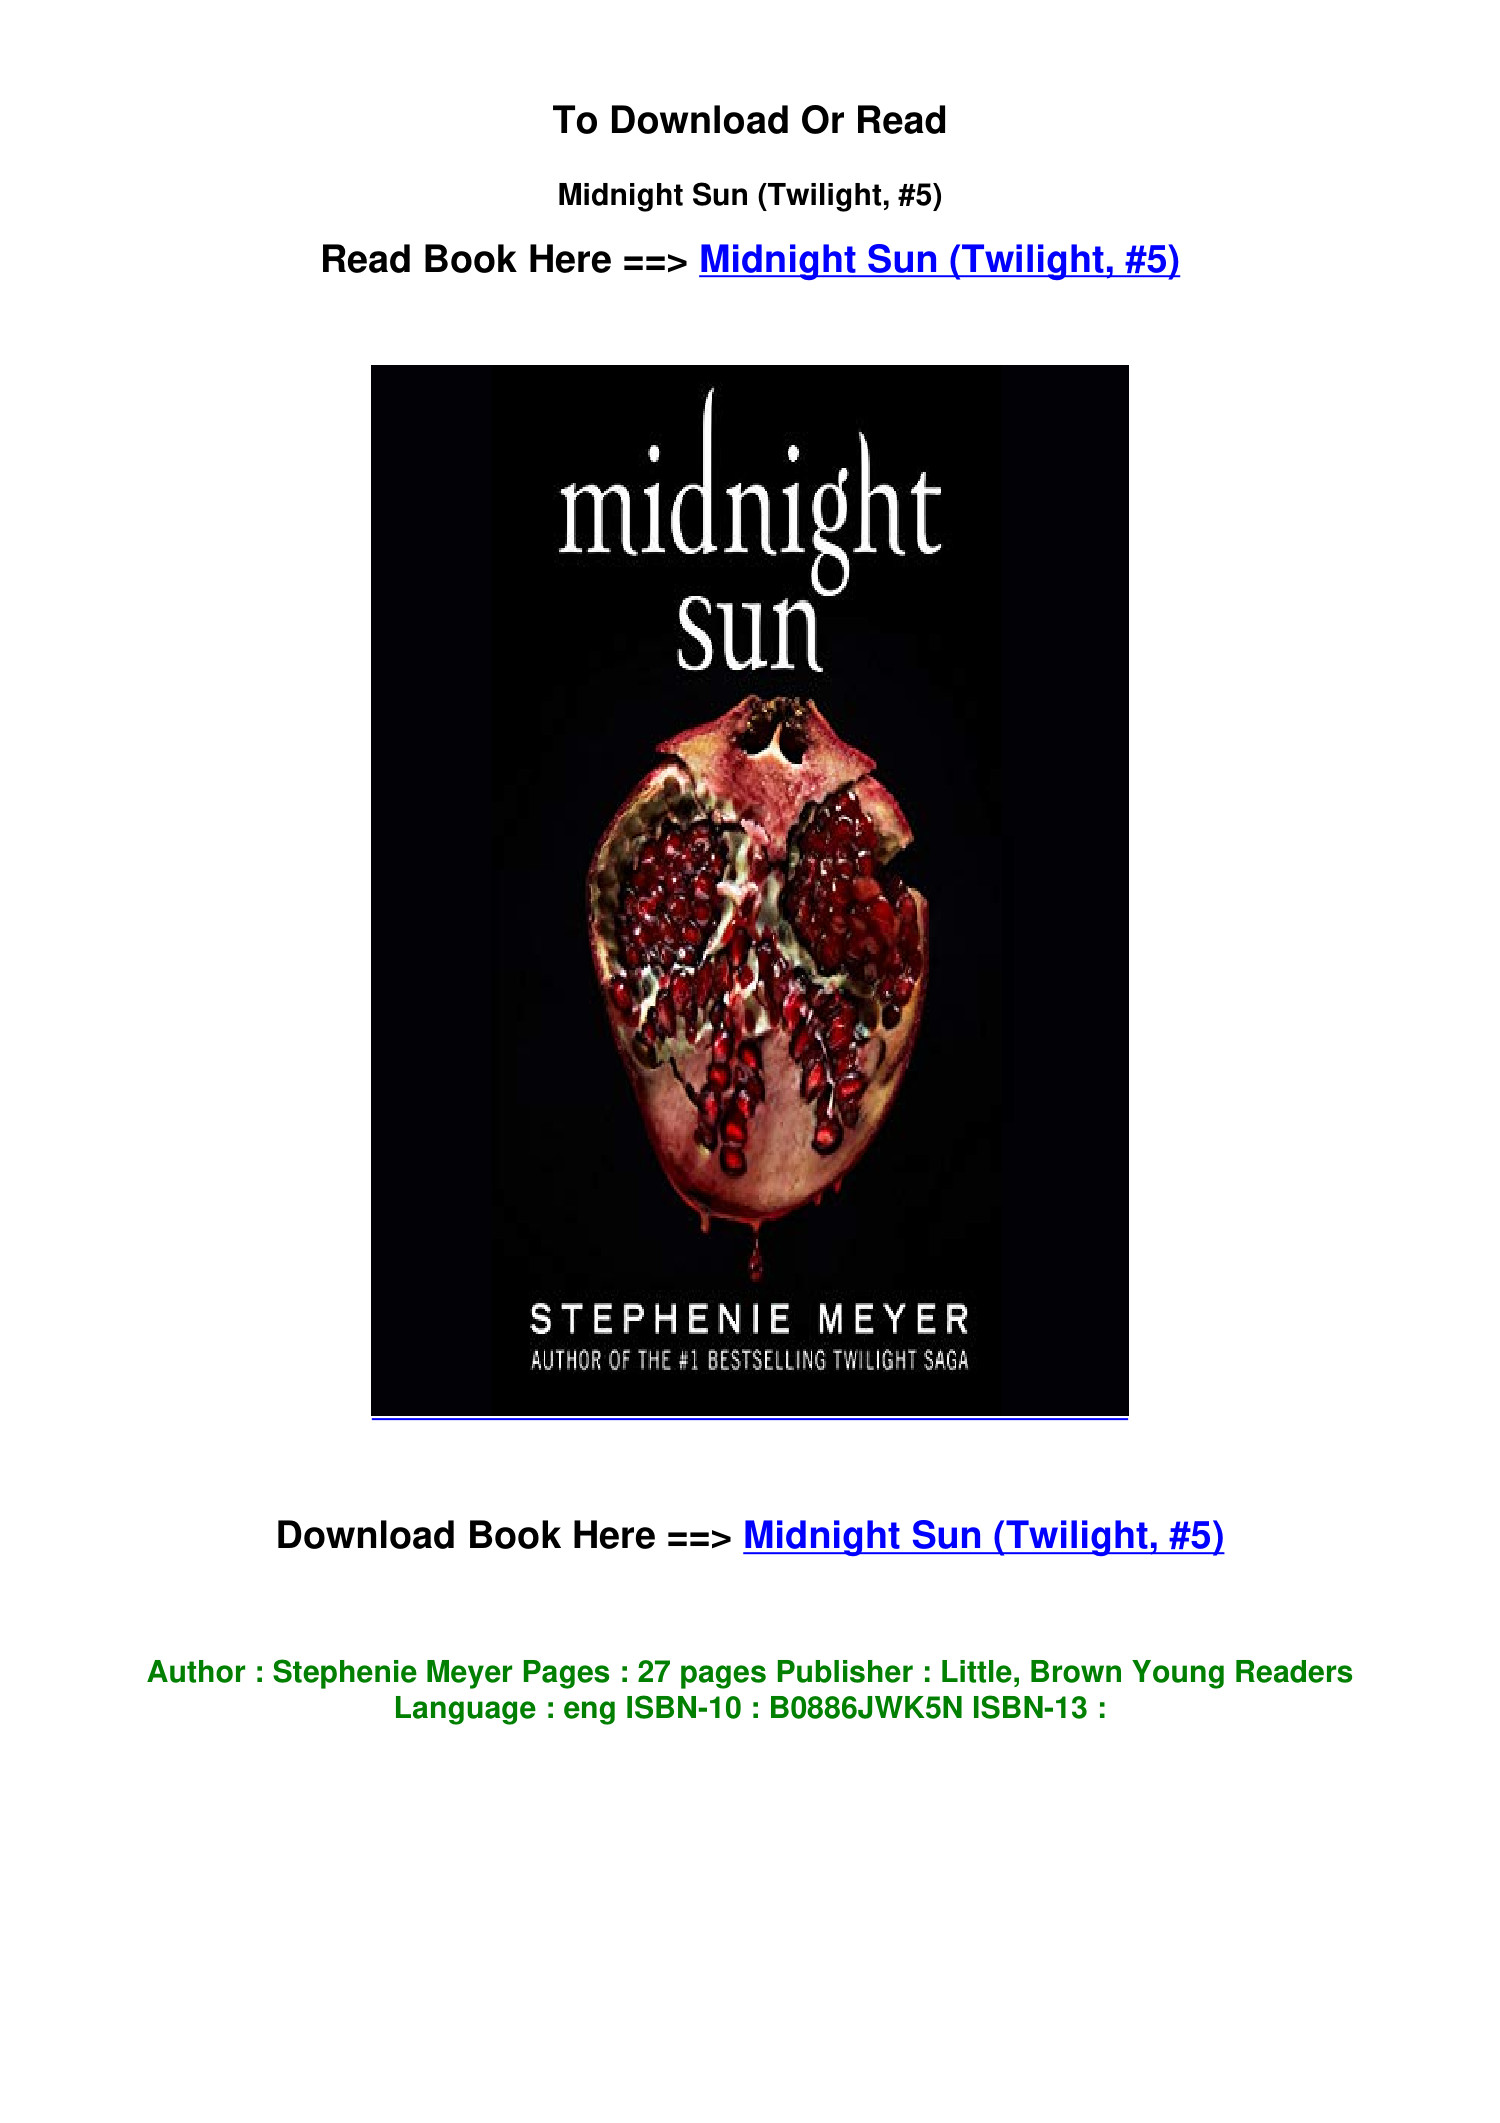 EPub Download Midnight Sun Twilight 5 by Stephenie Meyer.pdf